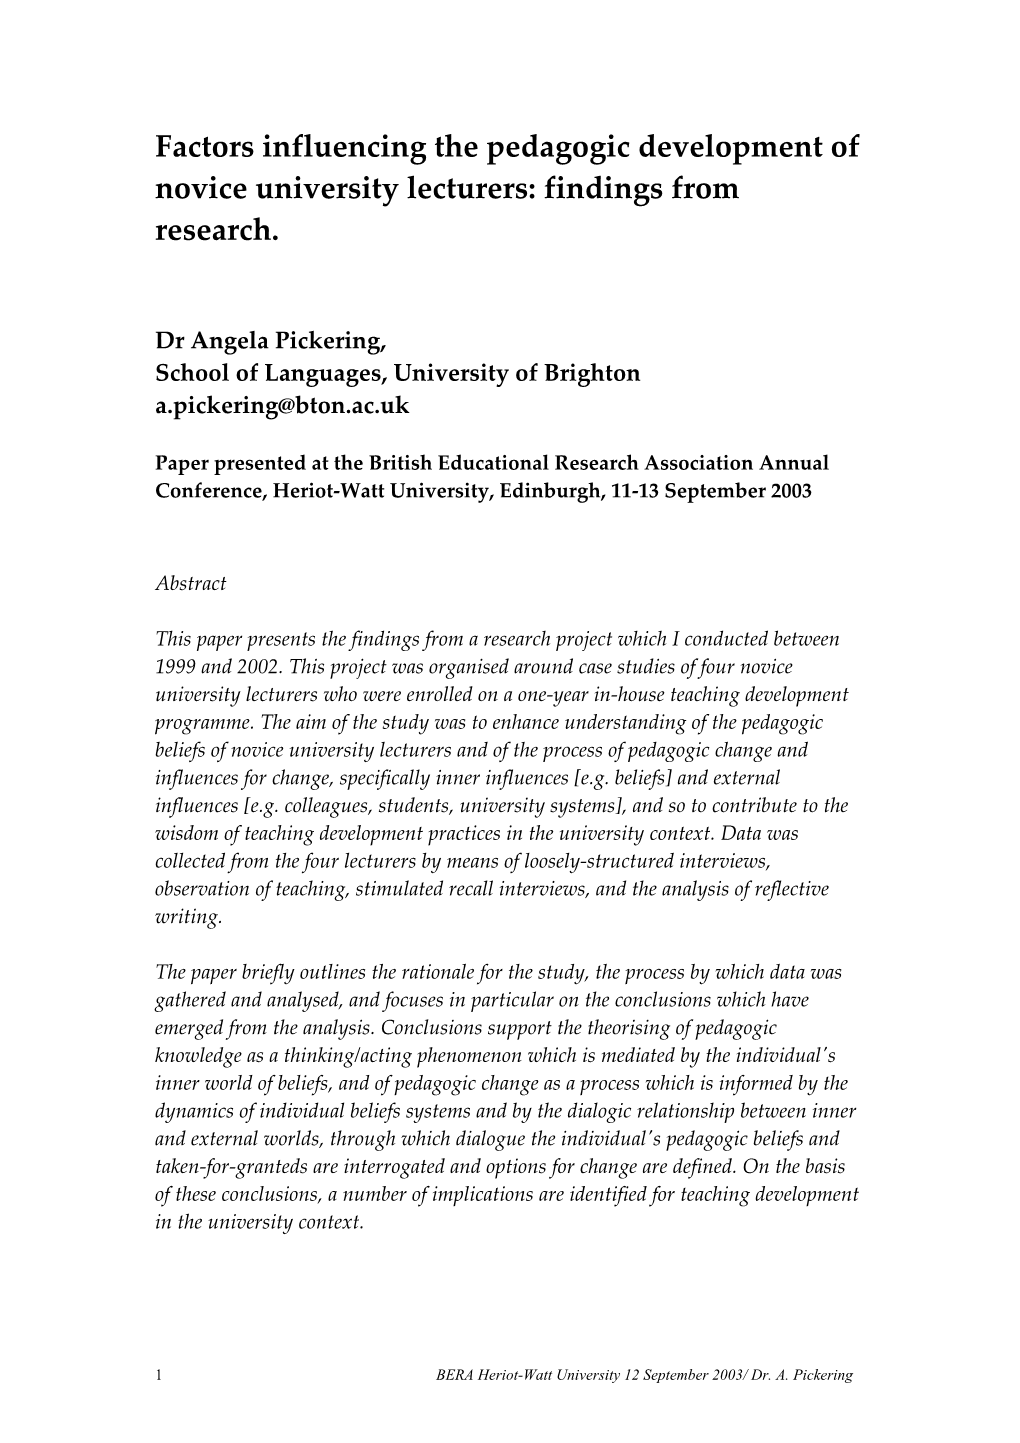 Factors Influencing the Pedagogic Development of Novice University Lecturers: Findings